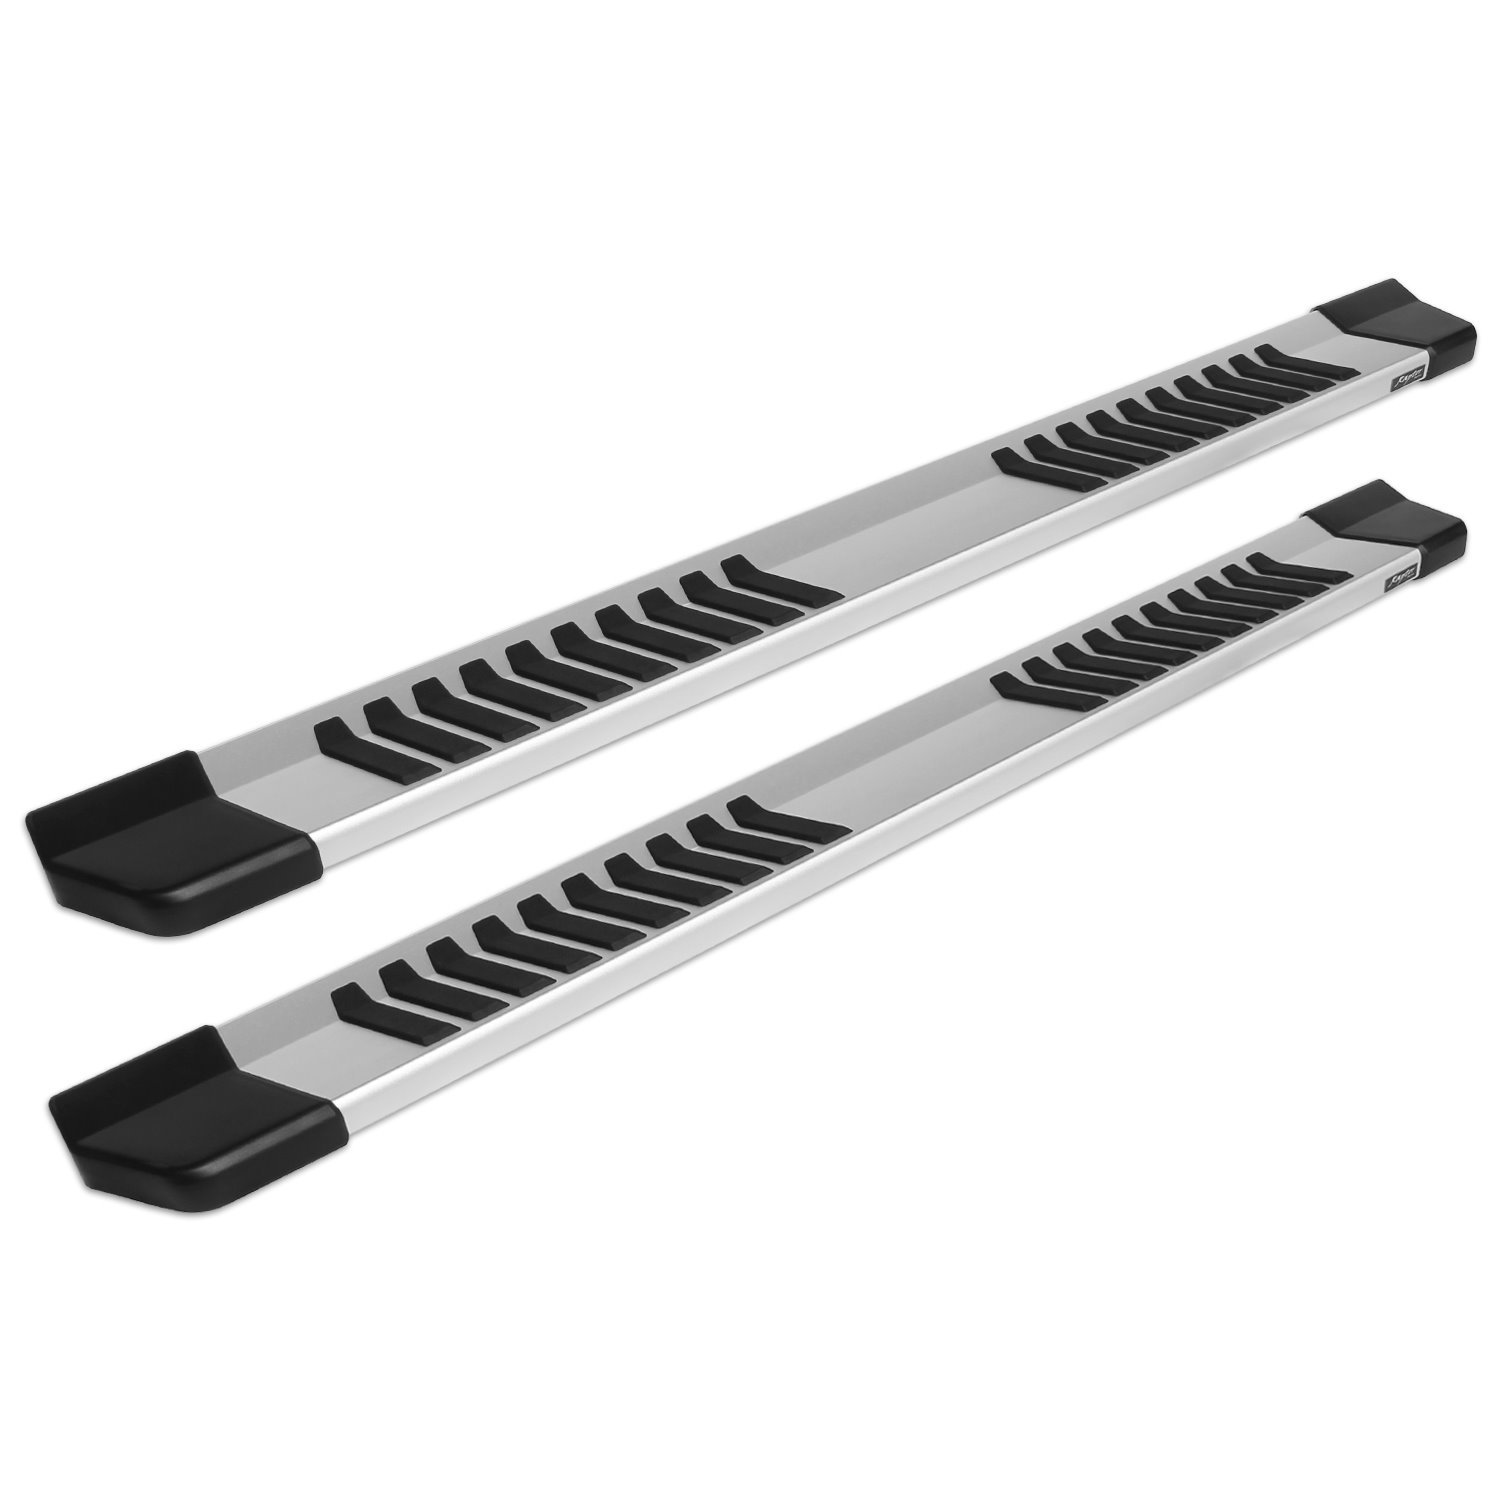 1701-0185 6 in OEM Style Slide Track Running Boards, Brushed Aluminum, 07-19 Chevy Silverado/GMC Sierra 1500/2500/3500